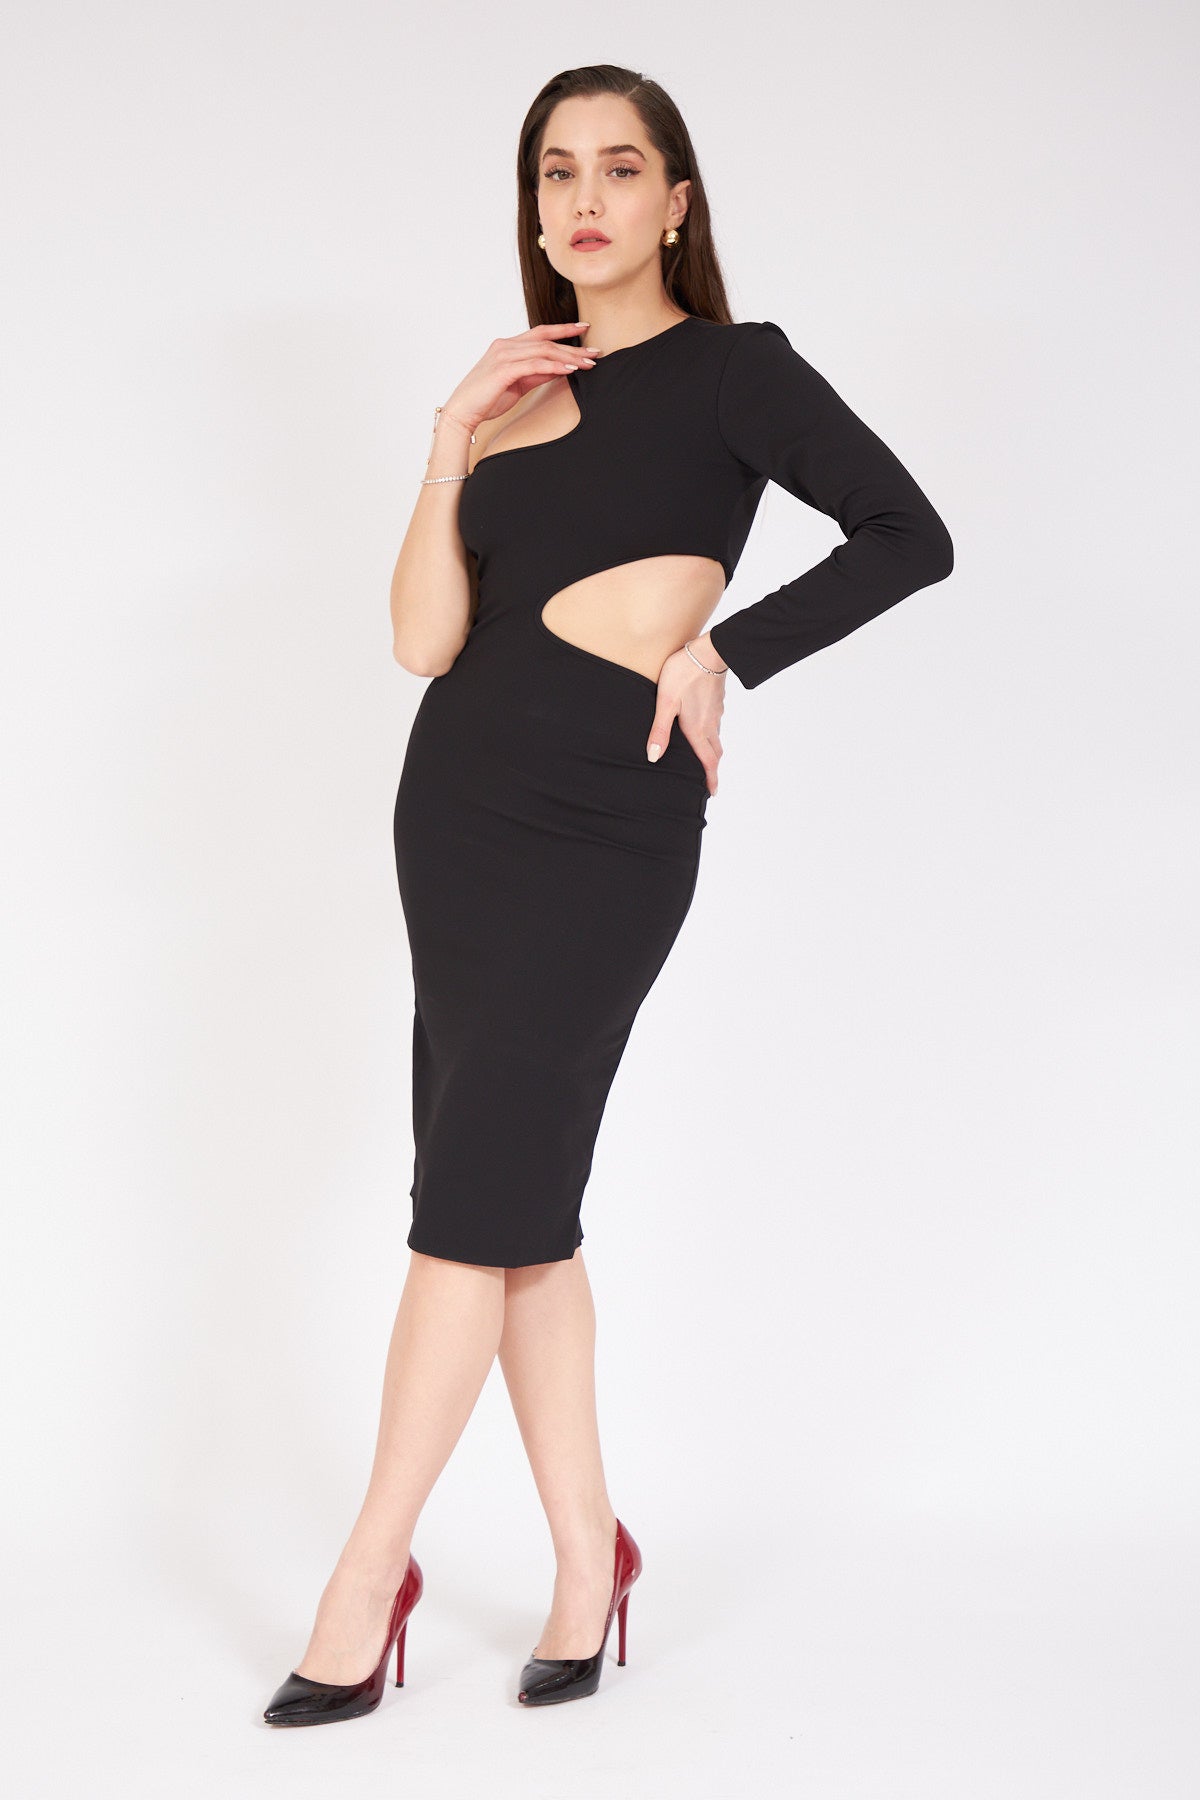 Black Shoulder And Waist Low-cut Dress - Lebbse